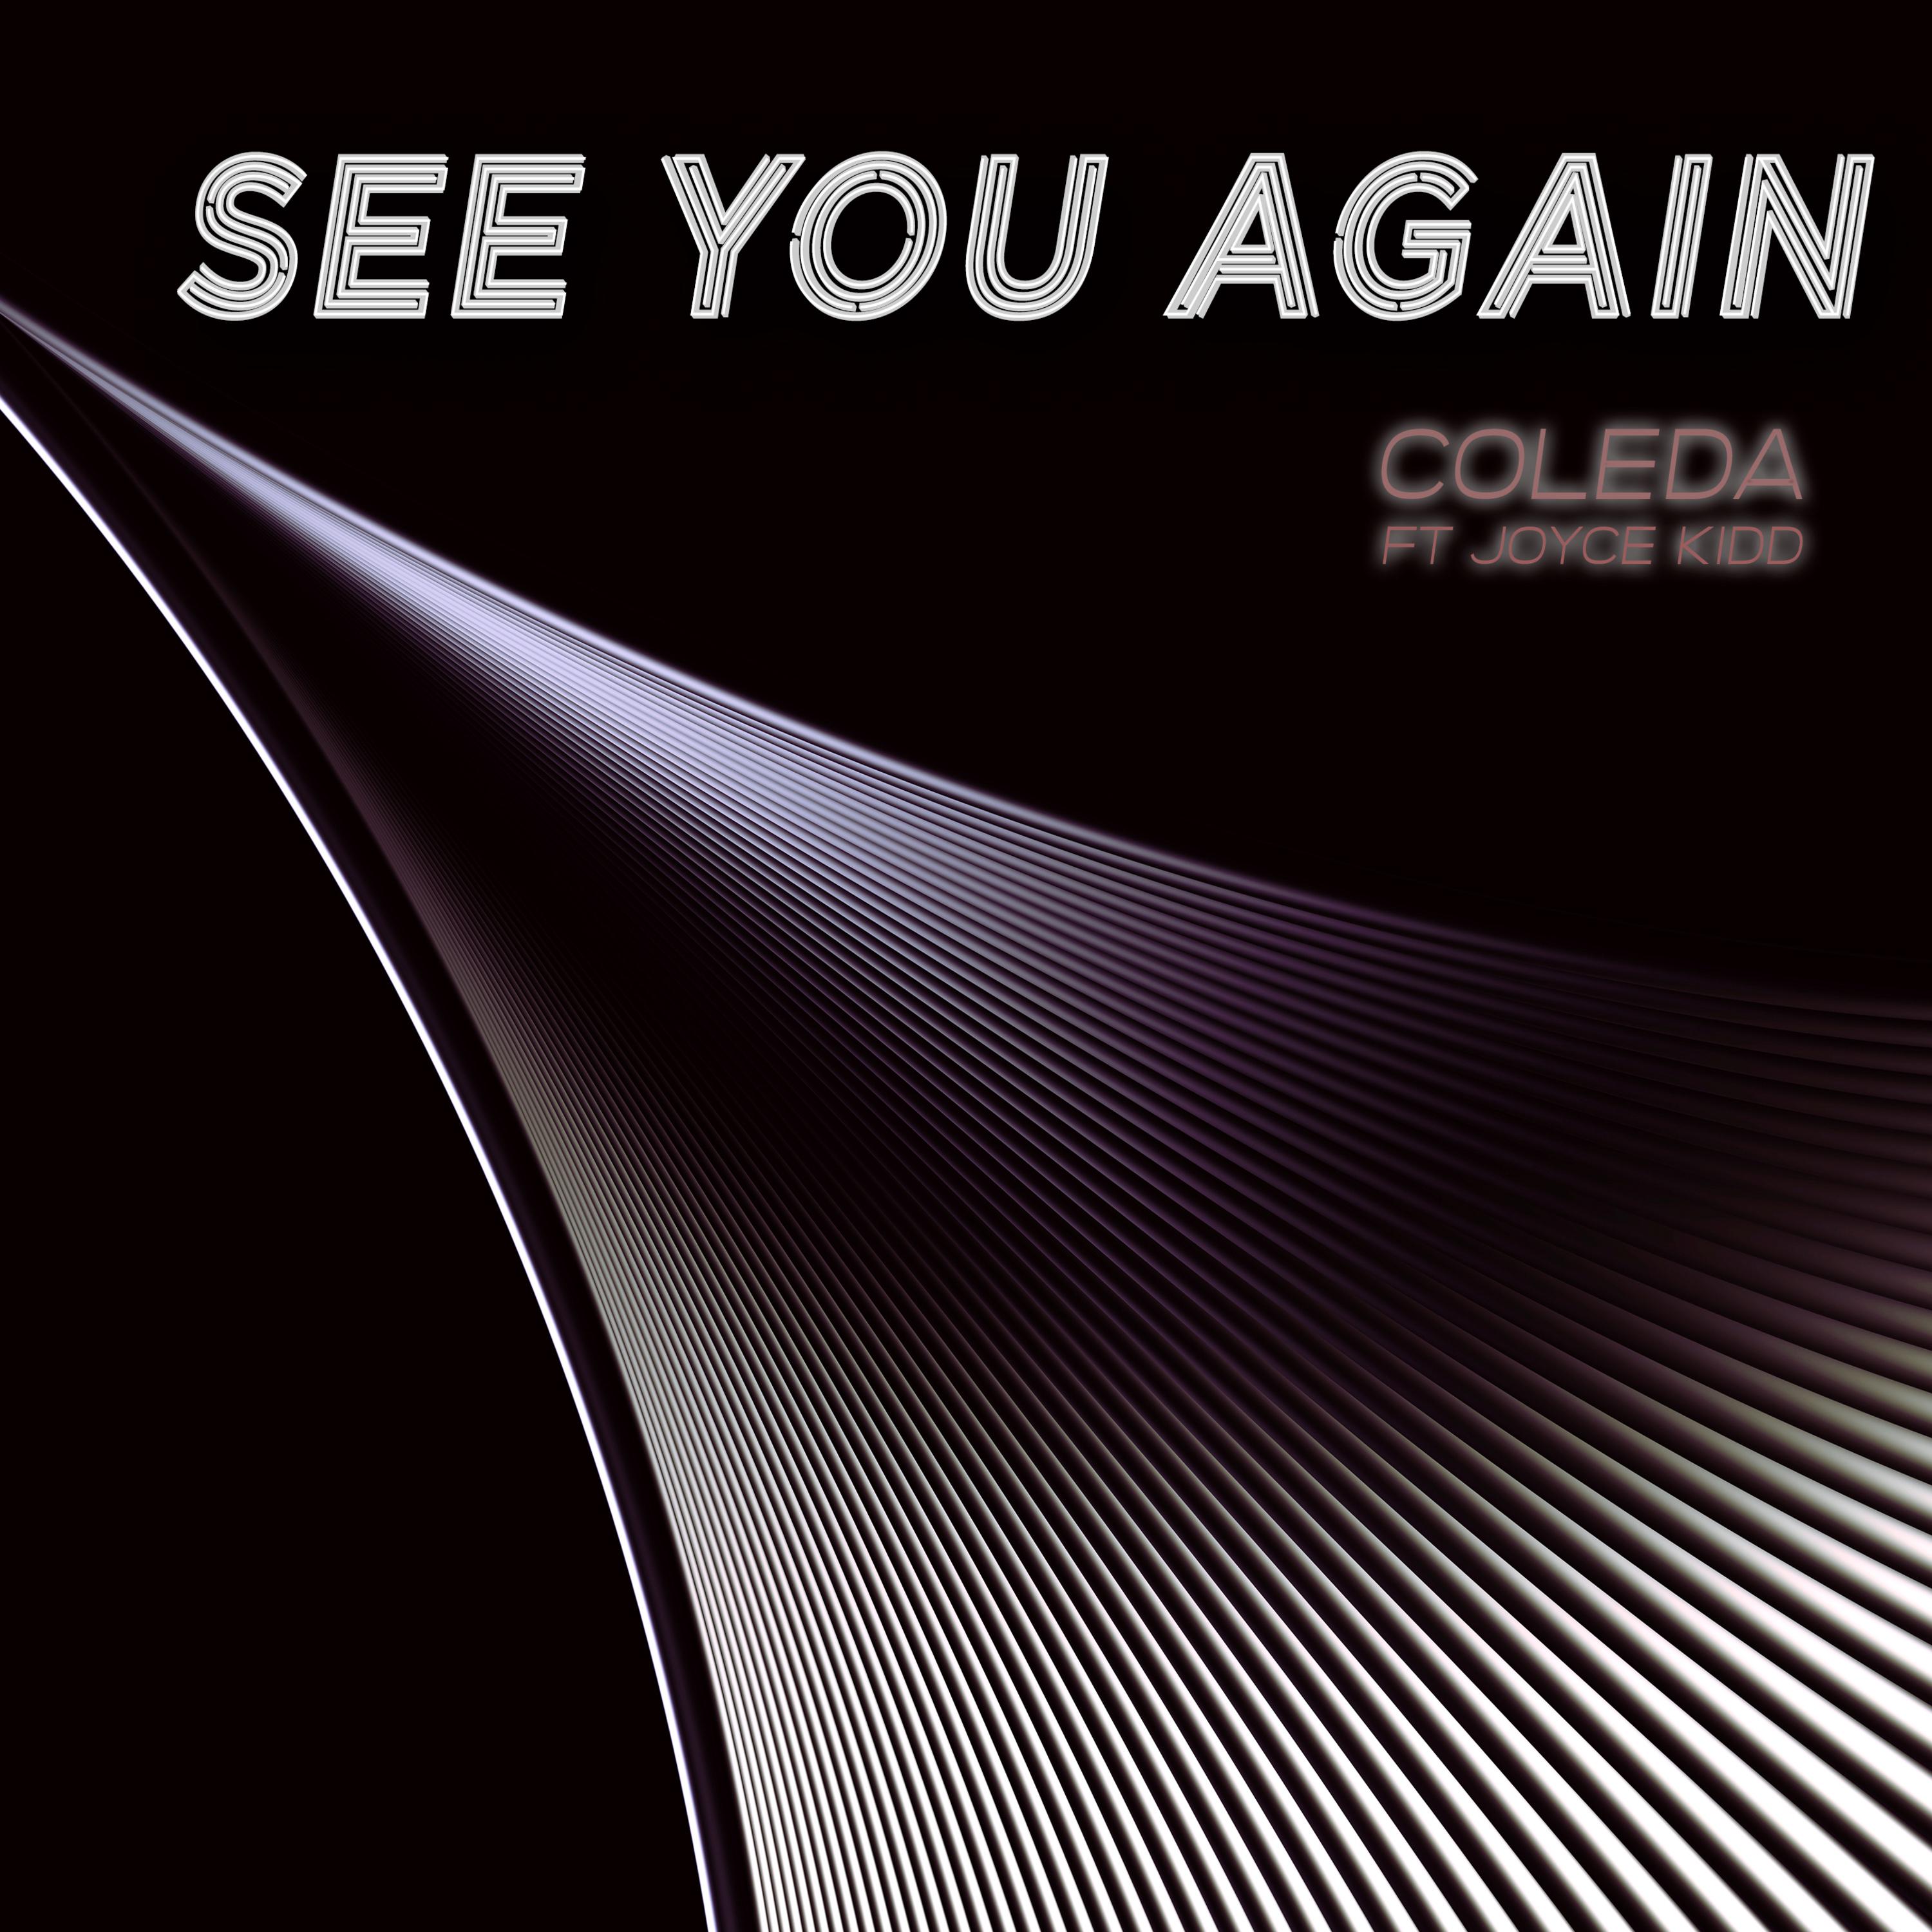 Coleda - See You Again (Furious 7 Club Radio Remix)